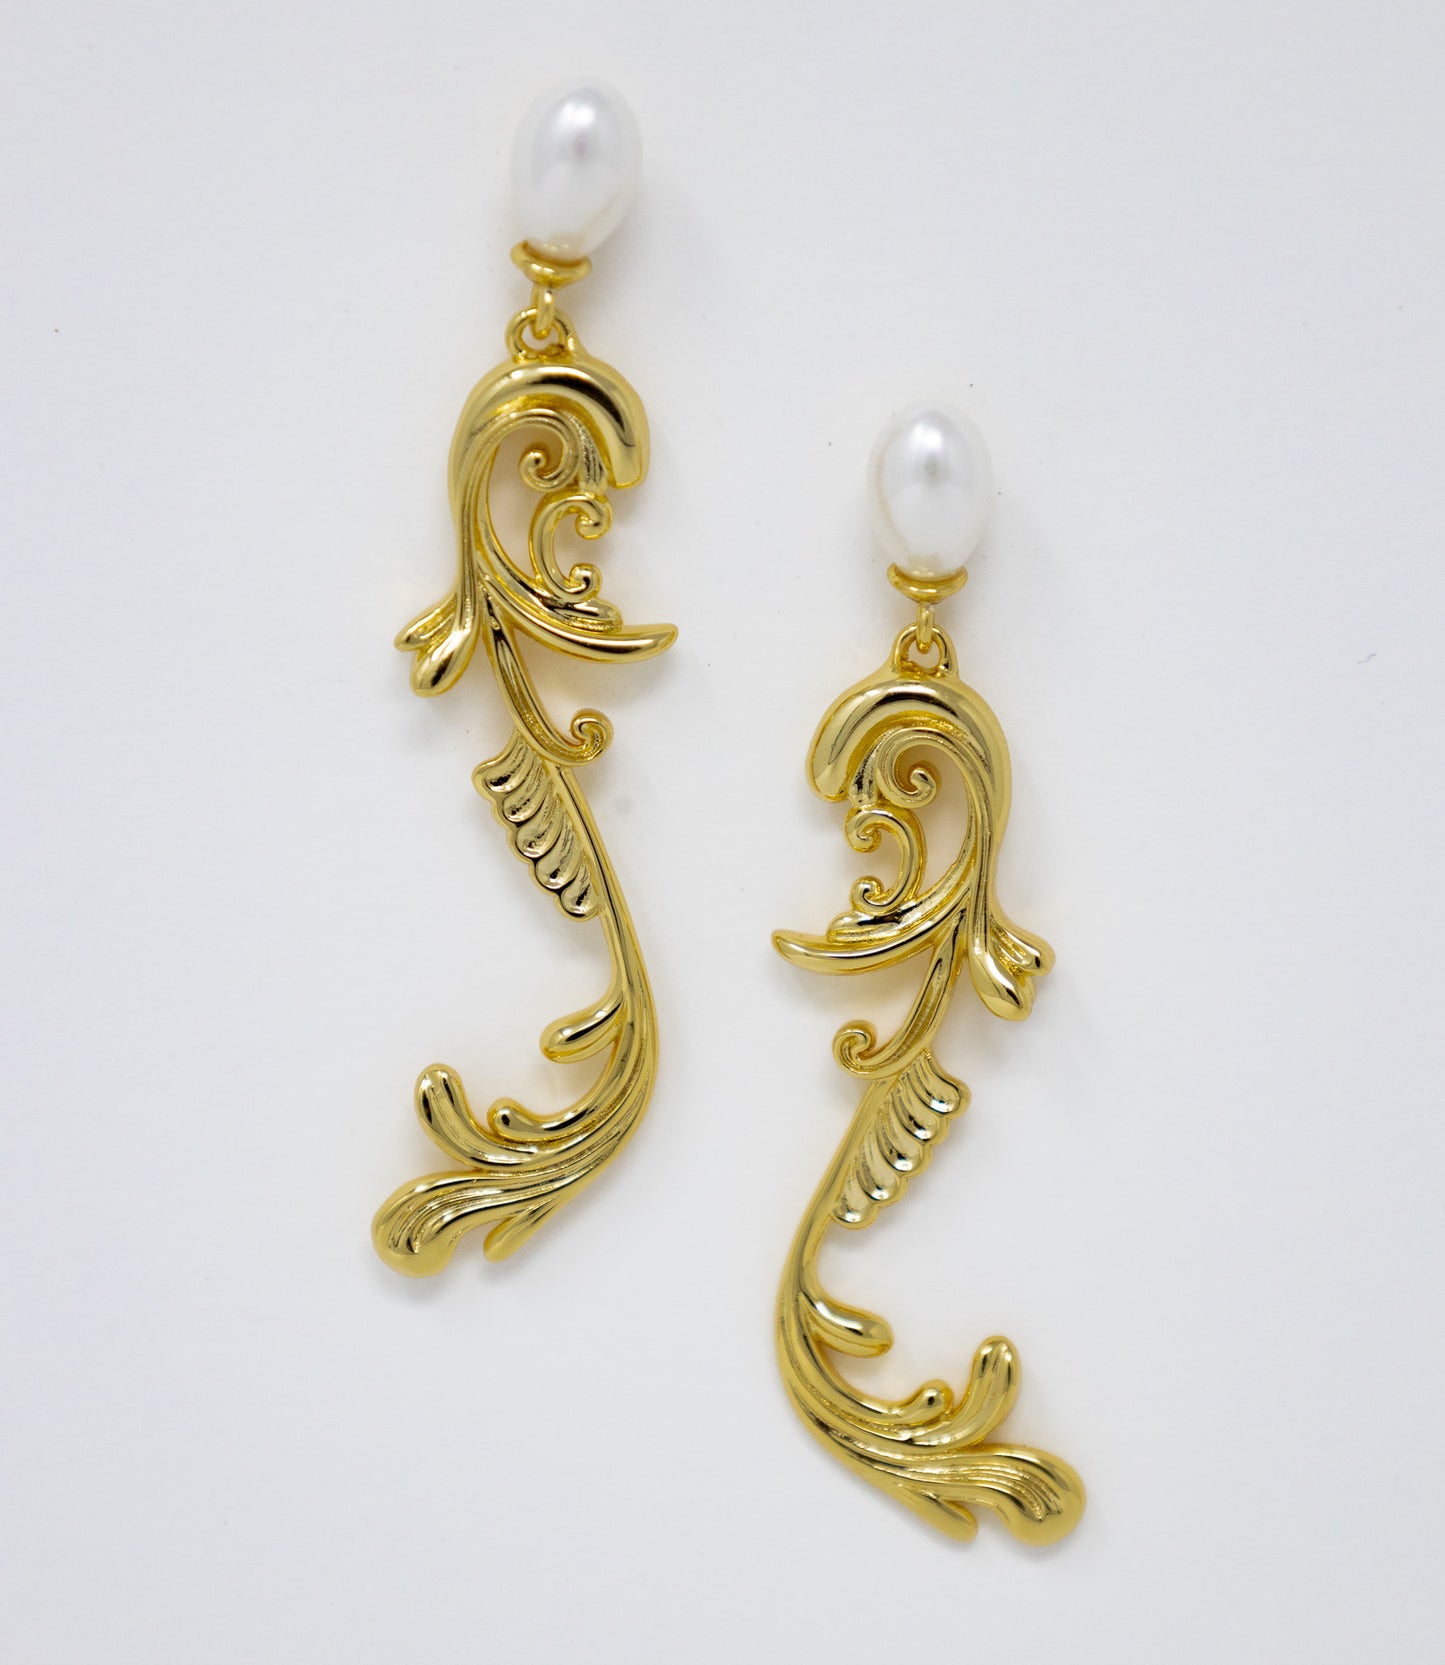 Victoria earrings